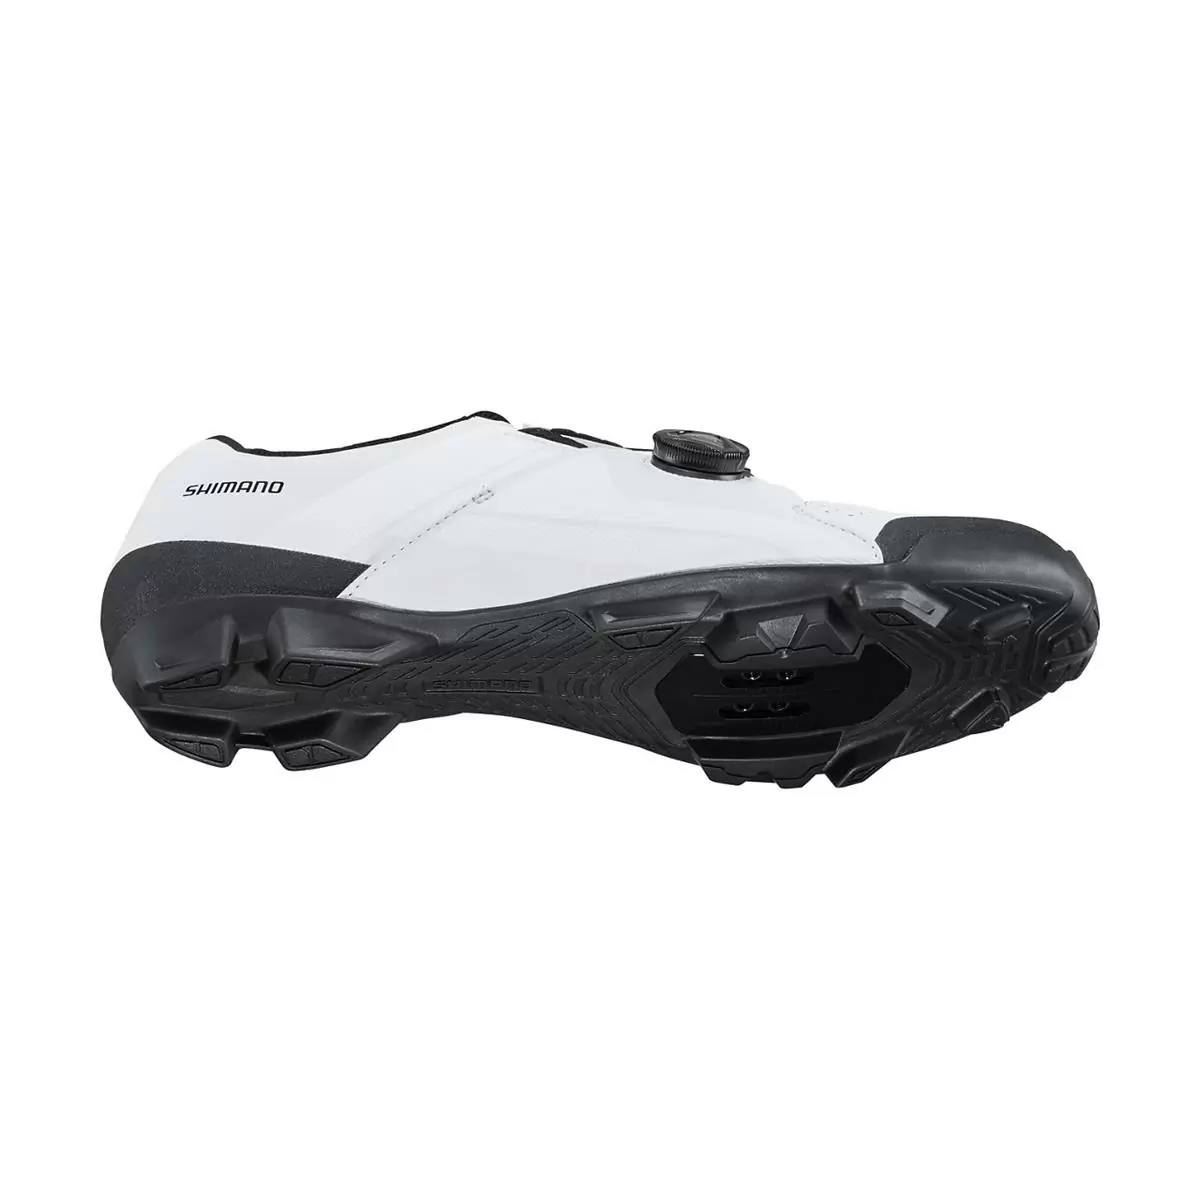 MTB shoes XC3 SH-XC300 White Size 41 #1